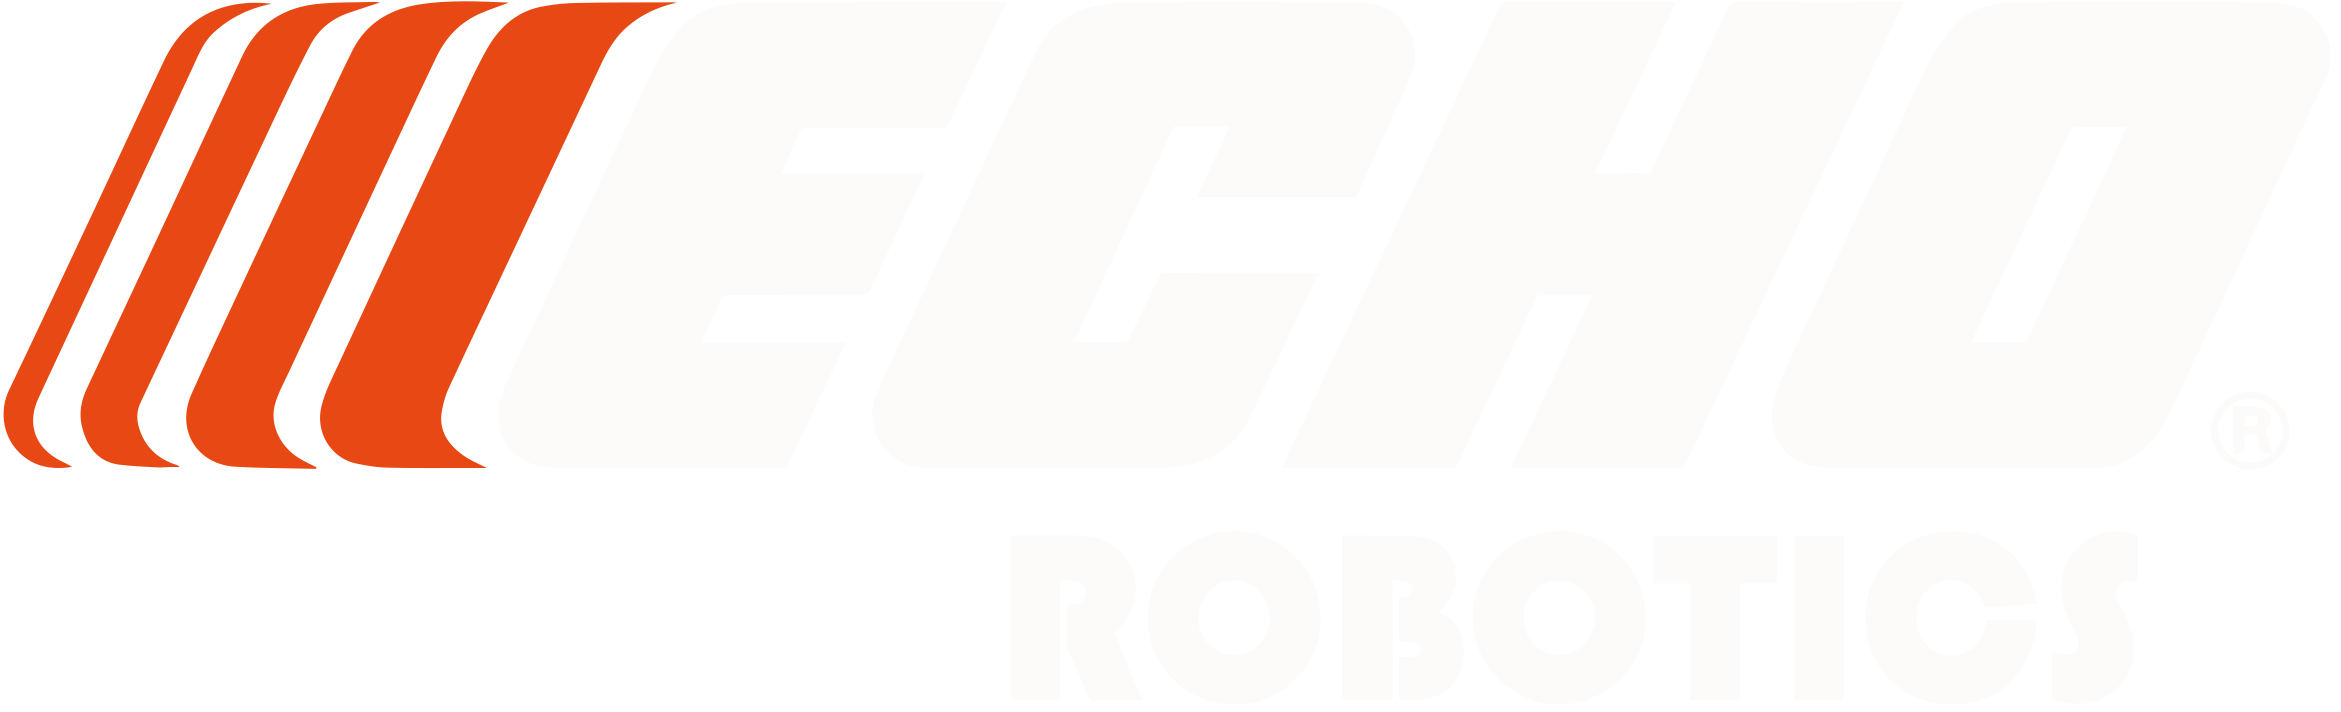 ECHO Robotics